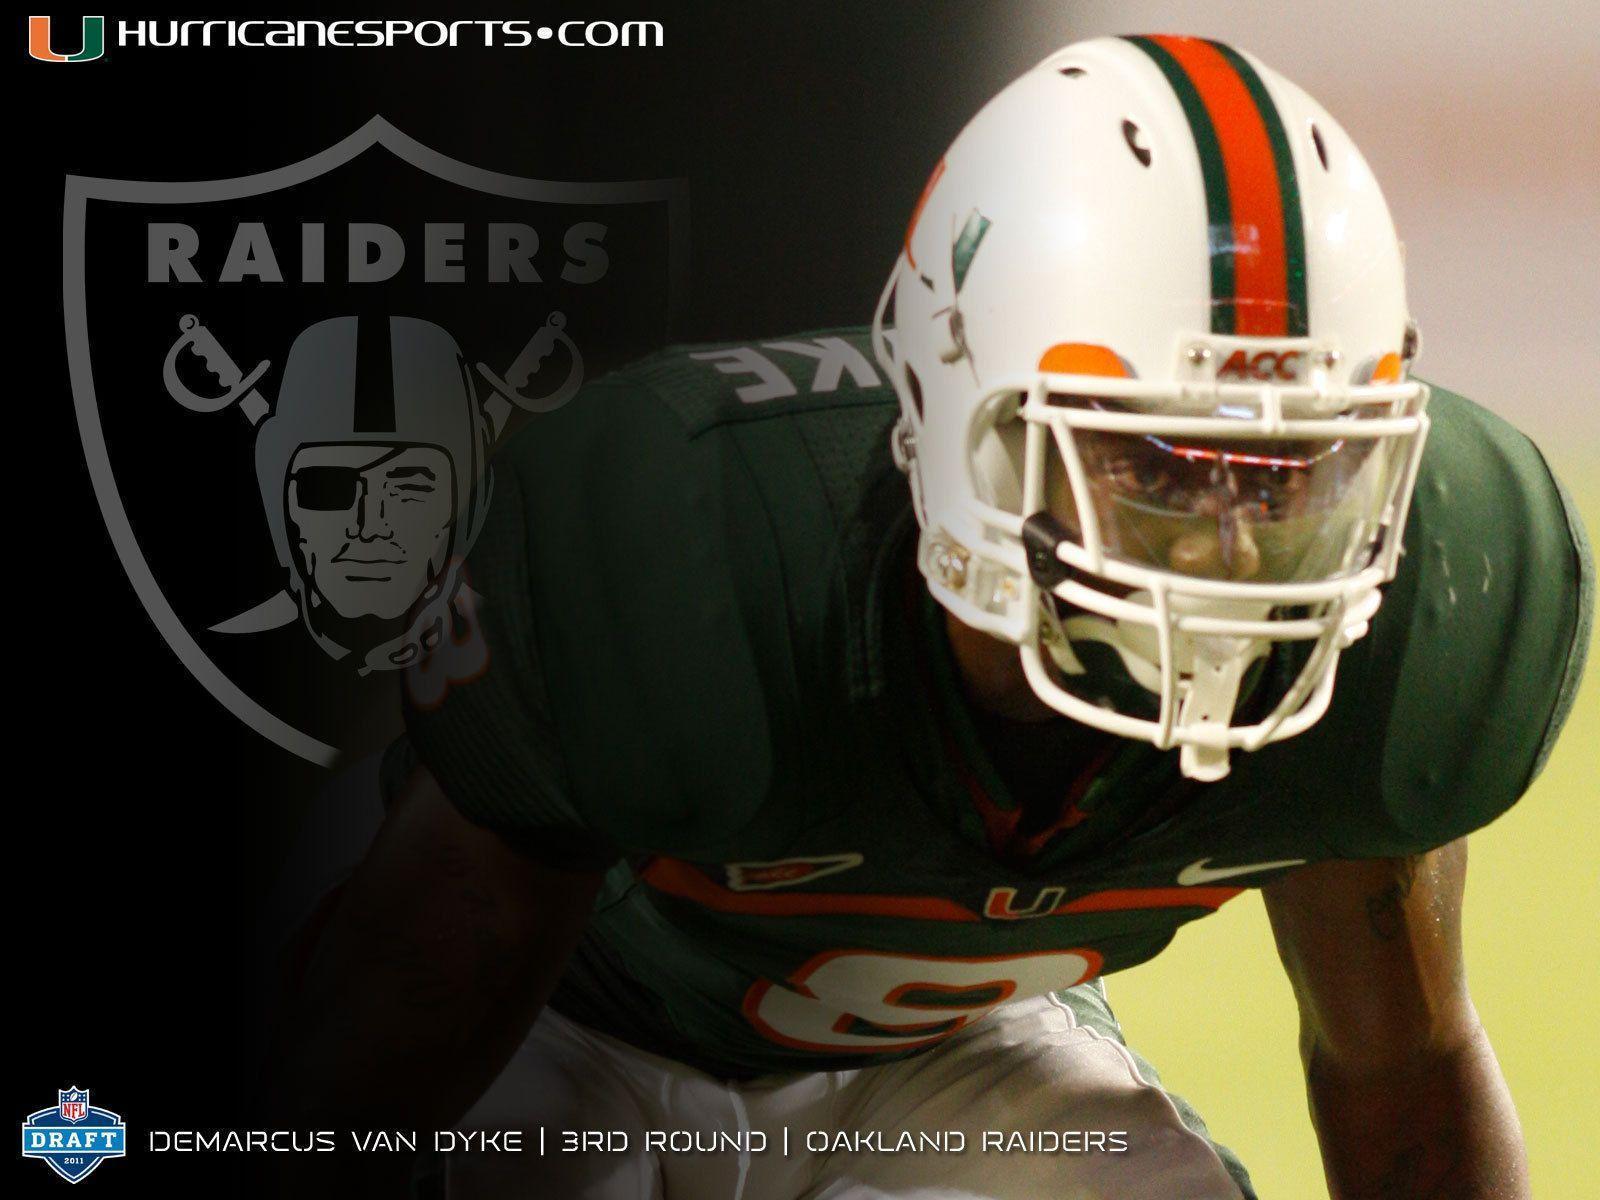 Wallpaper: Celebrate 2011 NFL Draft of Miami